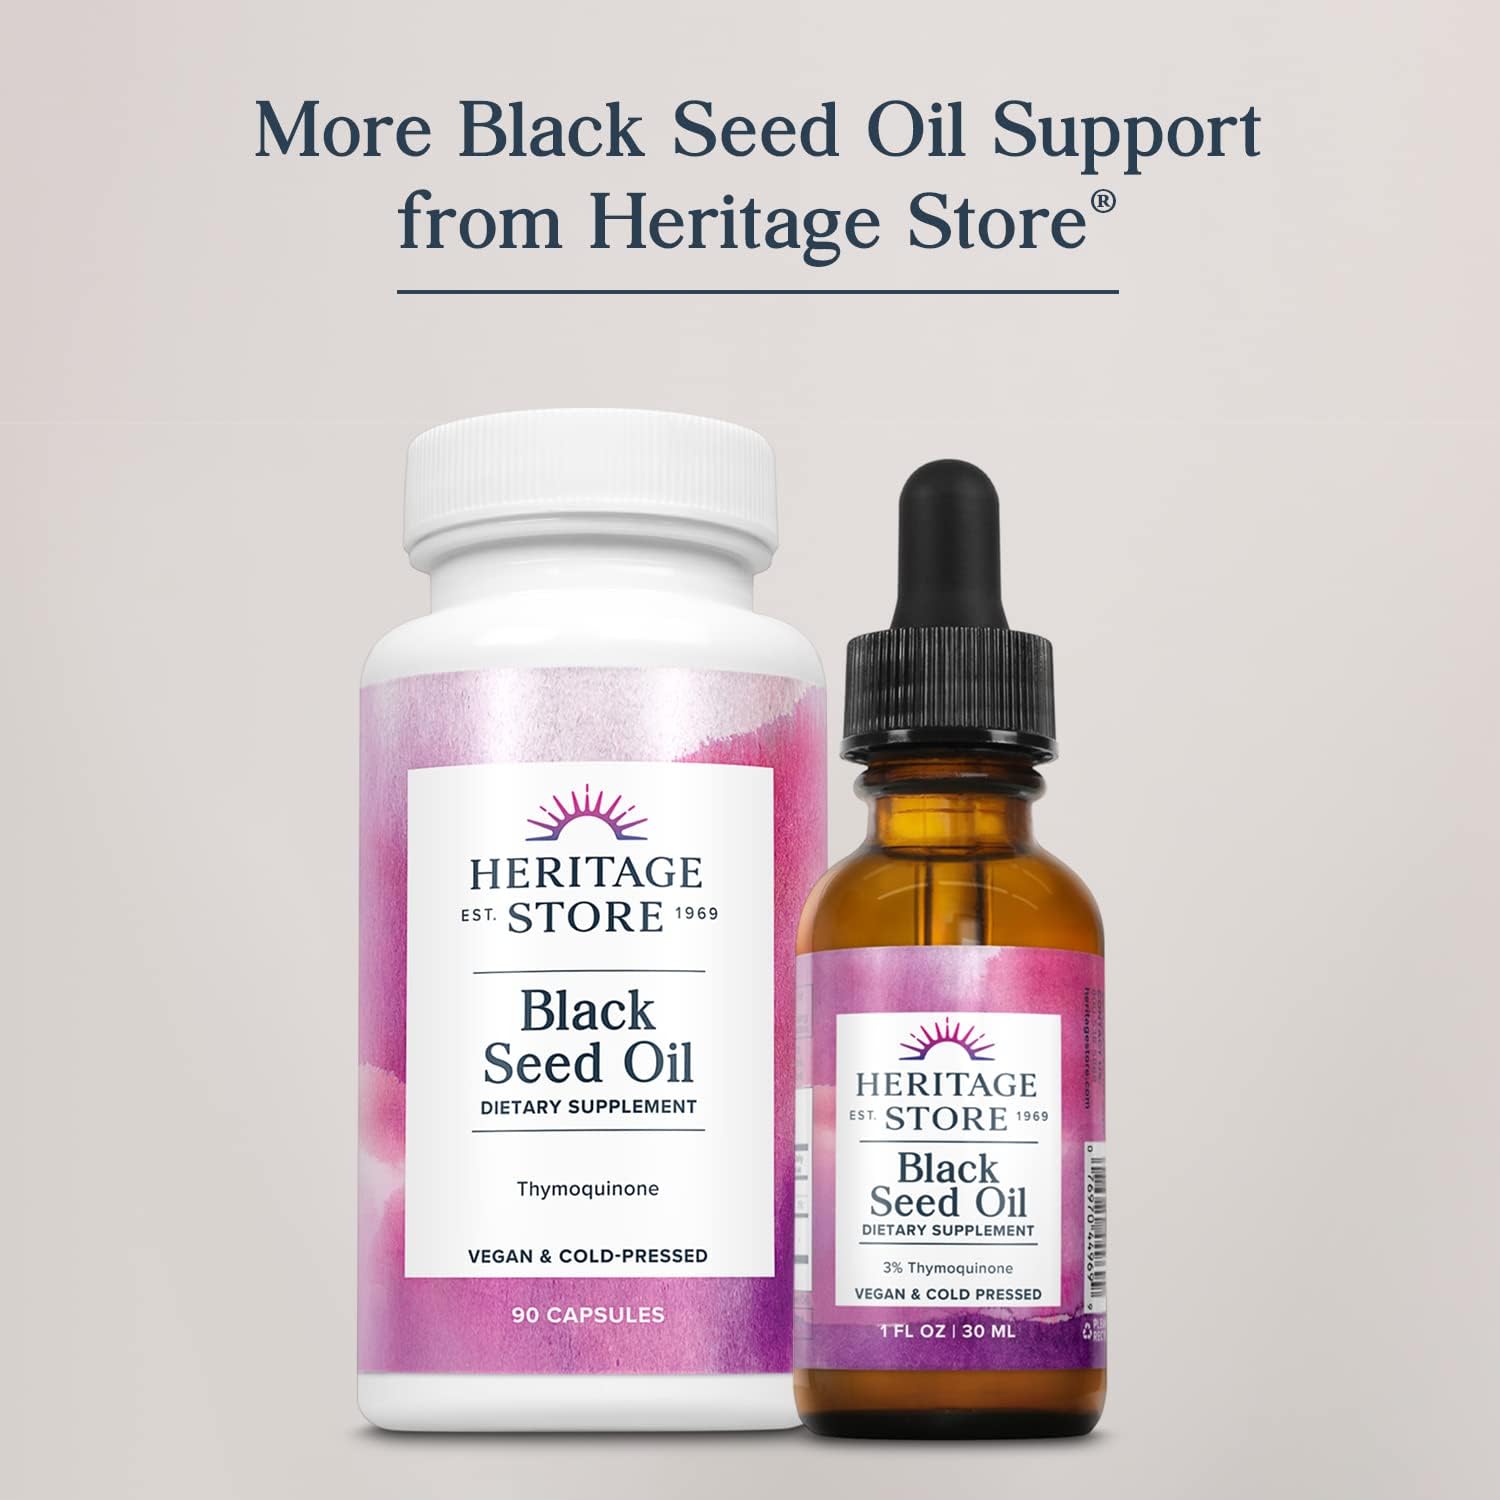 HERITAGE STORE Black Seed Oil, Organic, Cold Pressed, Nigella Sativa S